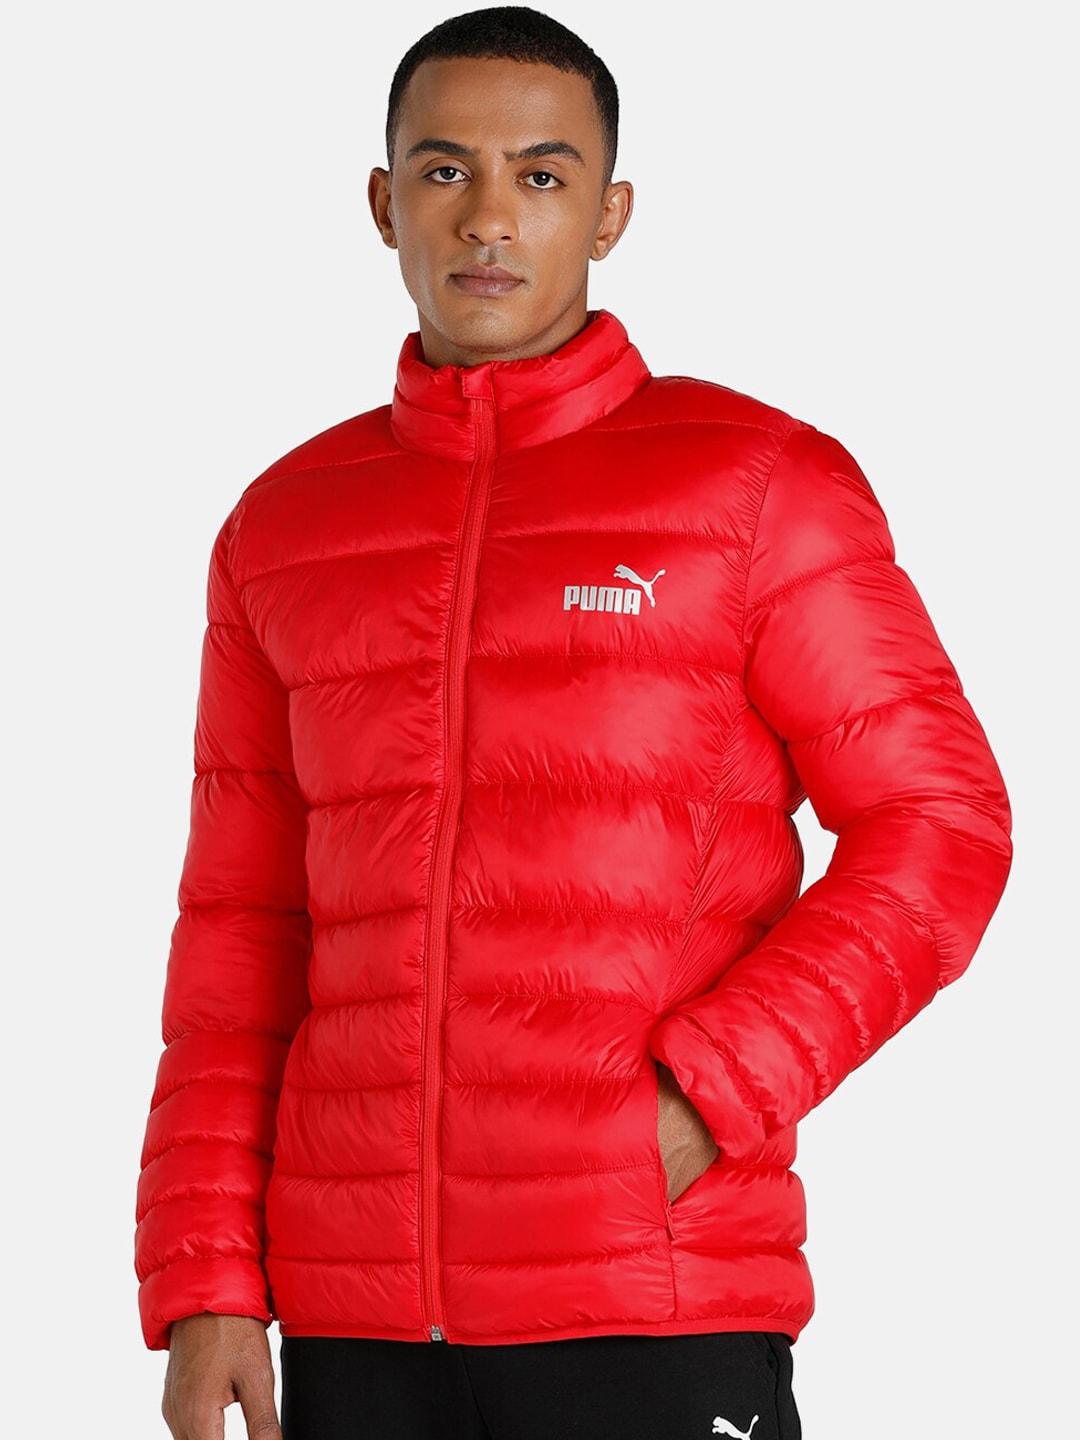 puma-men-red-bomber-jacket